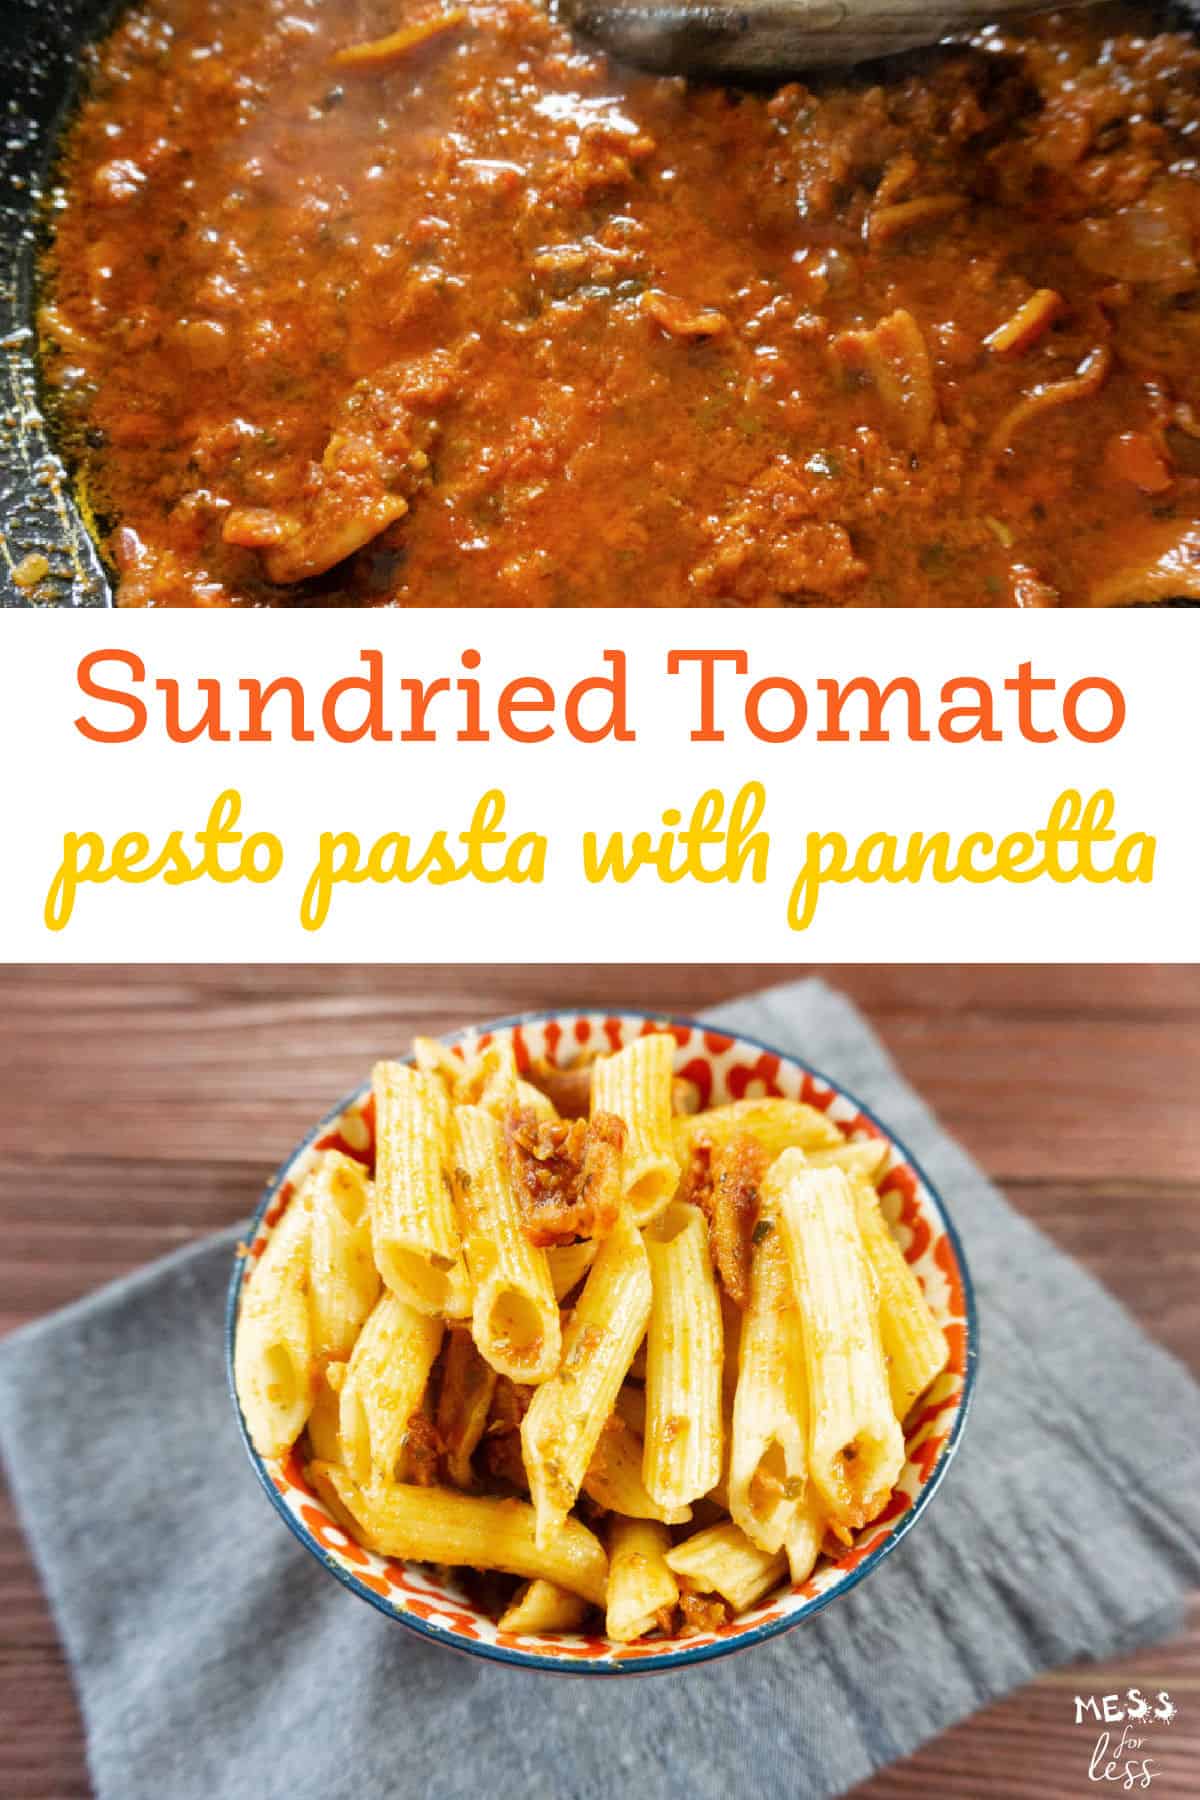 Sundried Tomato Pesto Pasta with Pancetta